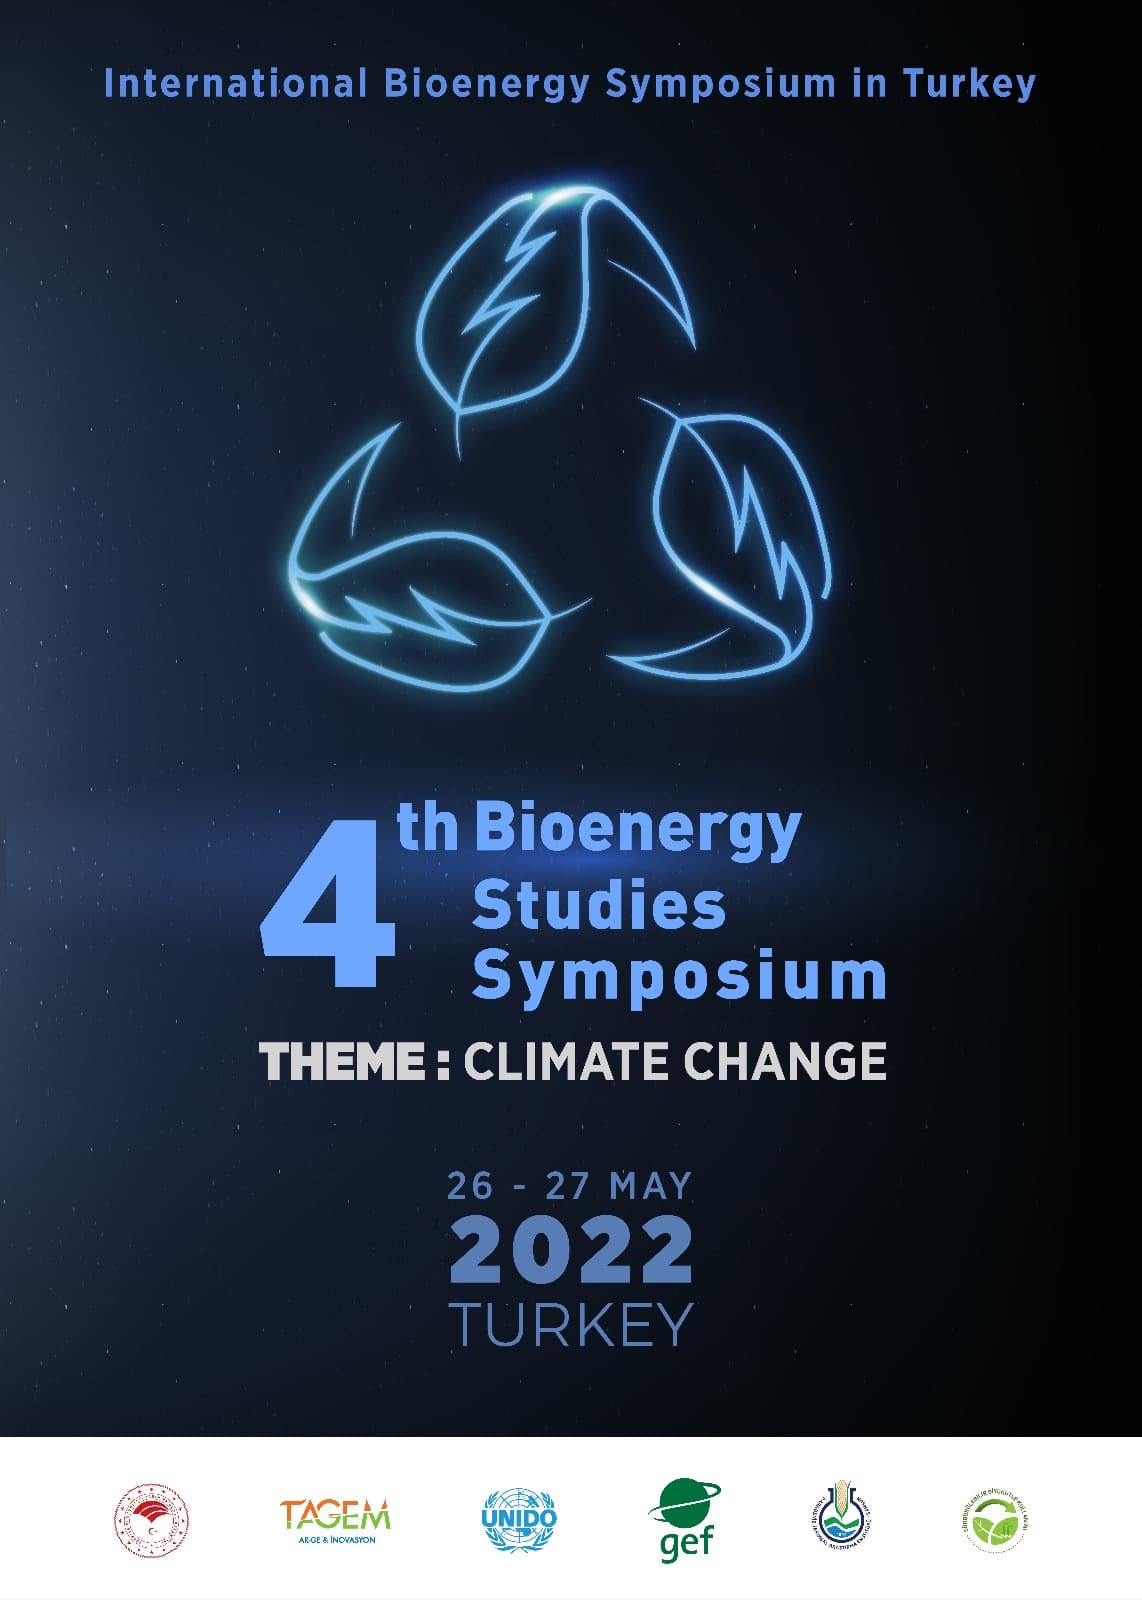 4th Bioenergy Studies Symposium